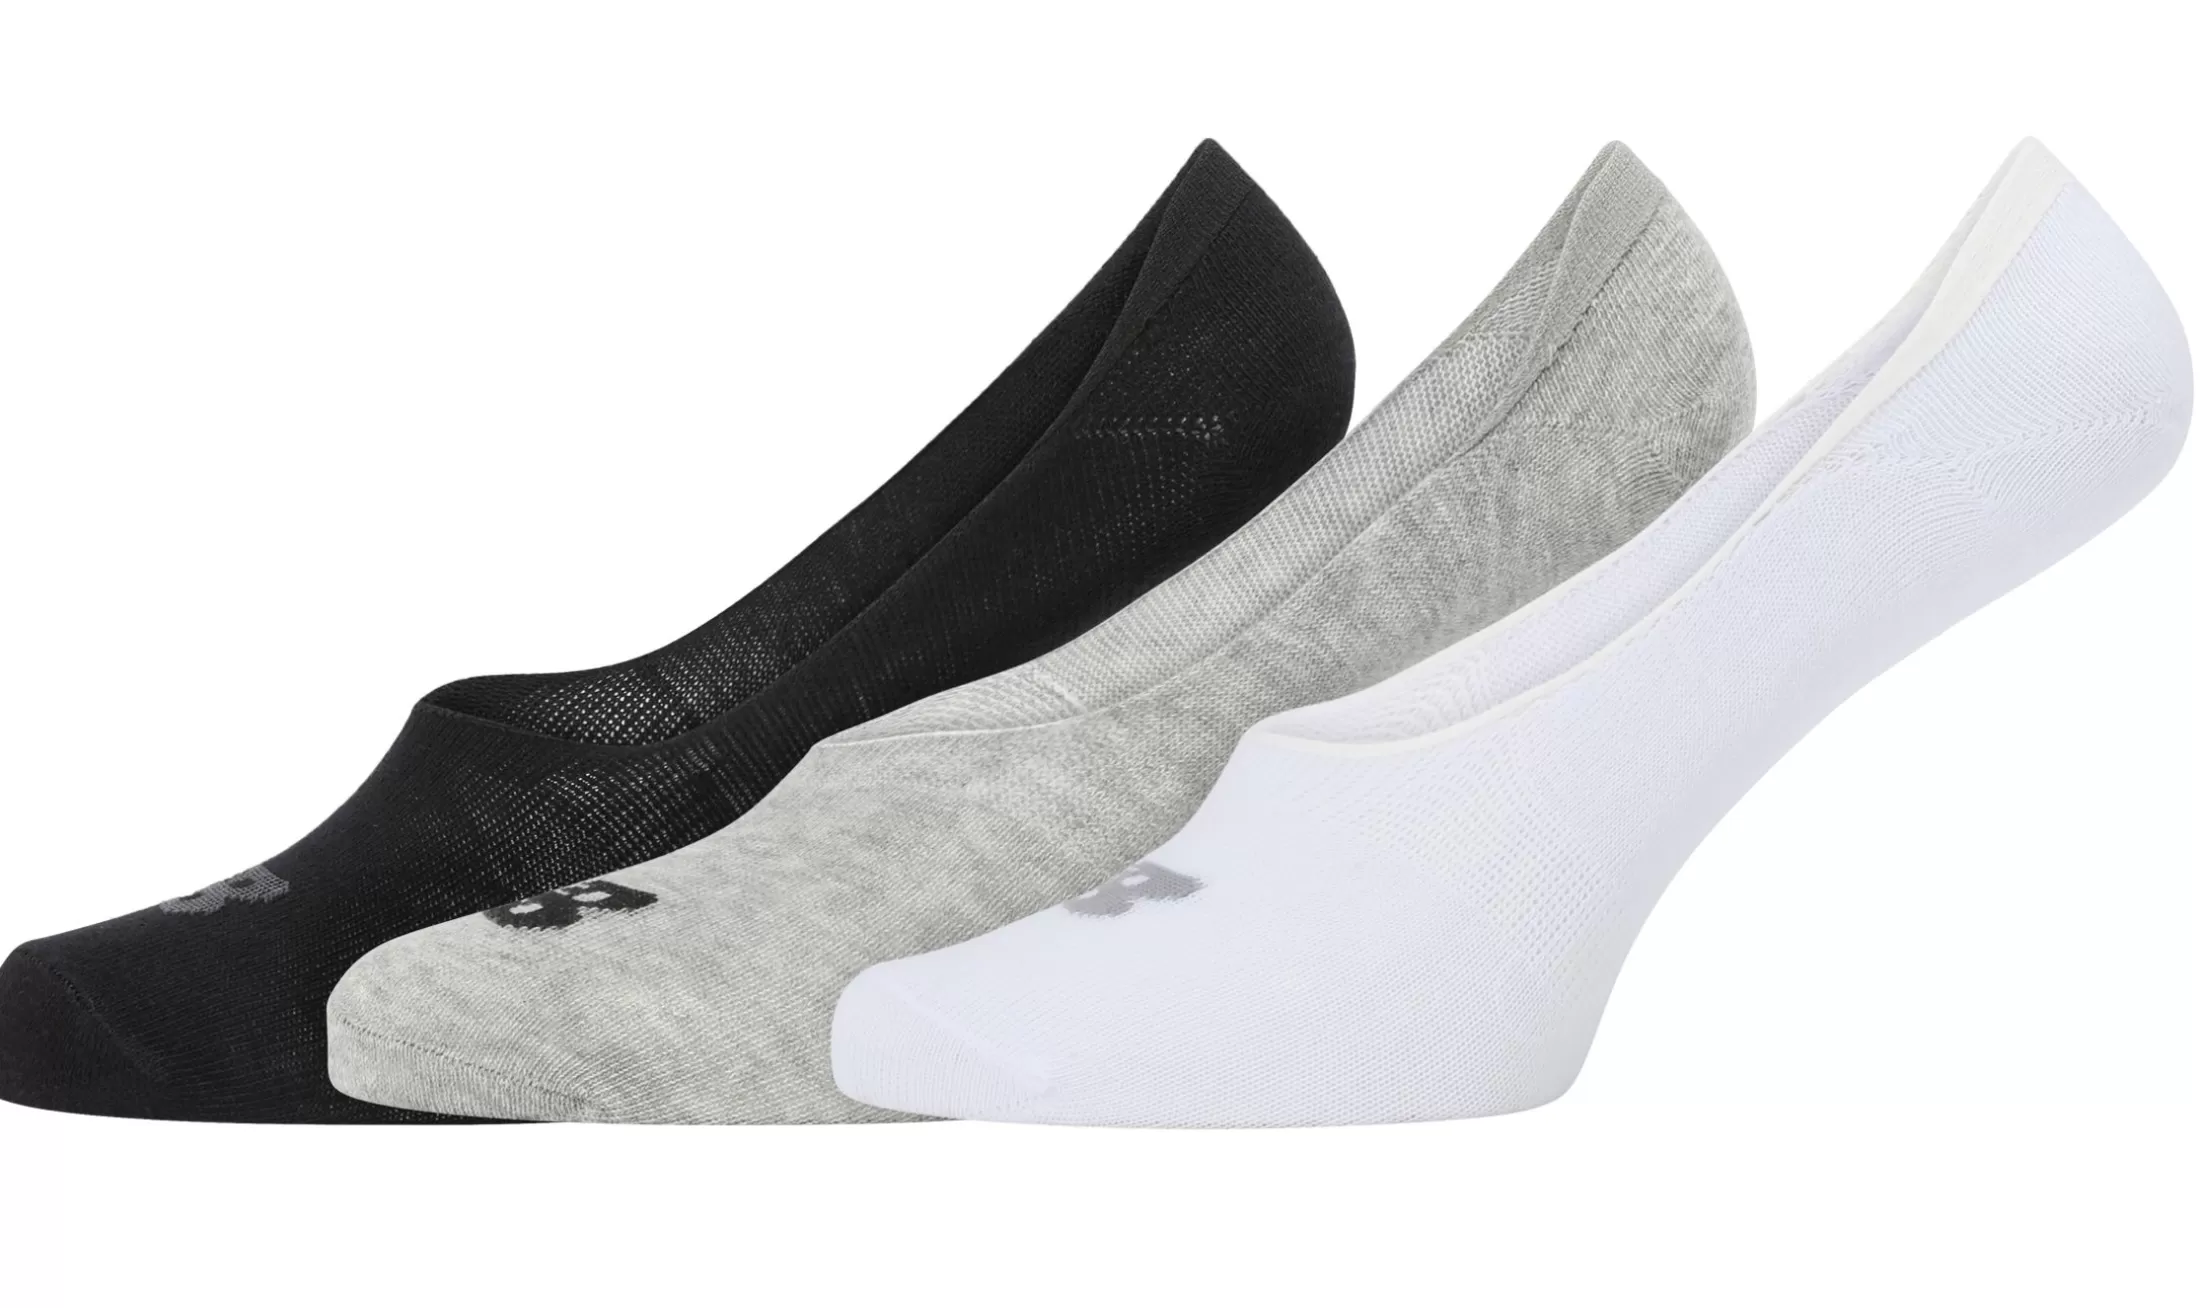 Cheap Unisex Performance Cotton Unseen Liner Socks 3 Pack MULHER/HOMEN Socks | All Accessories